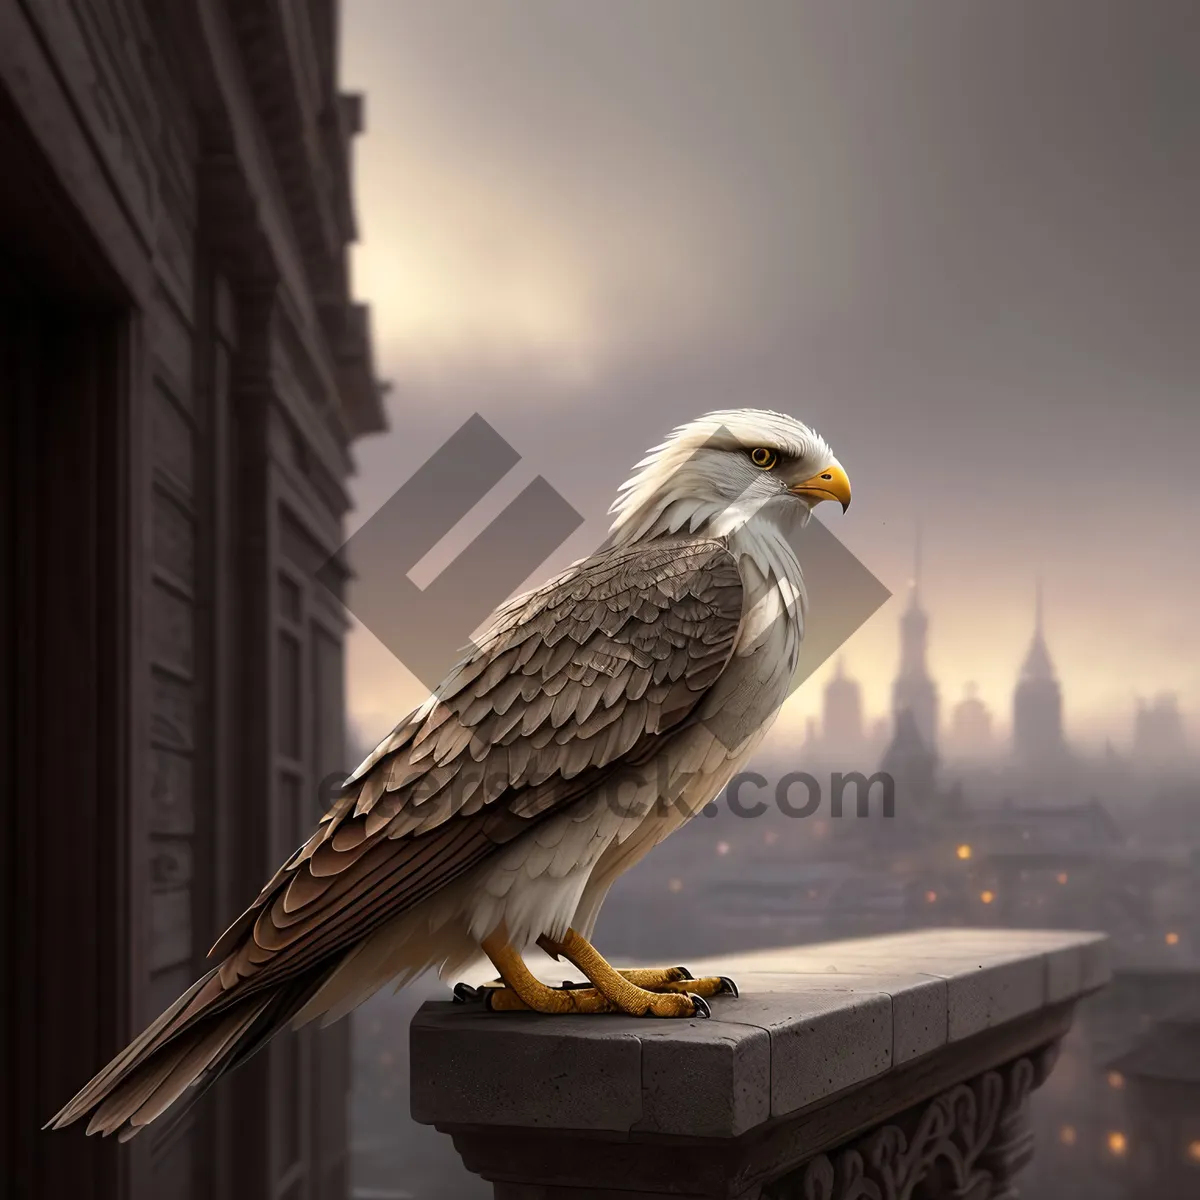 Picture of Majestic predator: Falcon soaring with golden gaze.